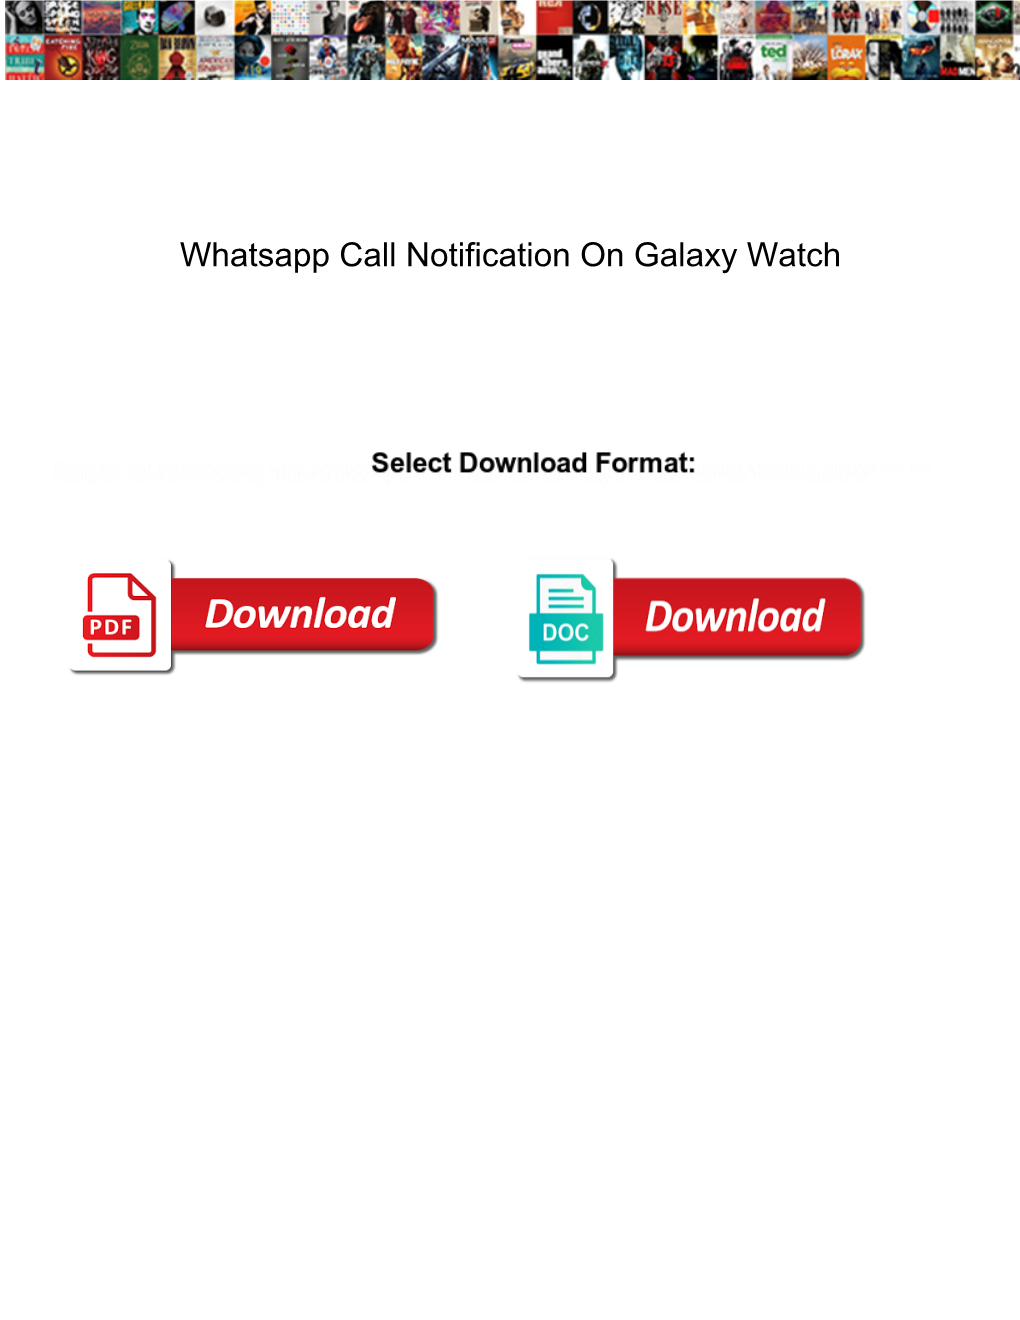 Whatsapp Call Notification on Galaxy Watch